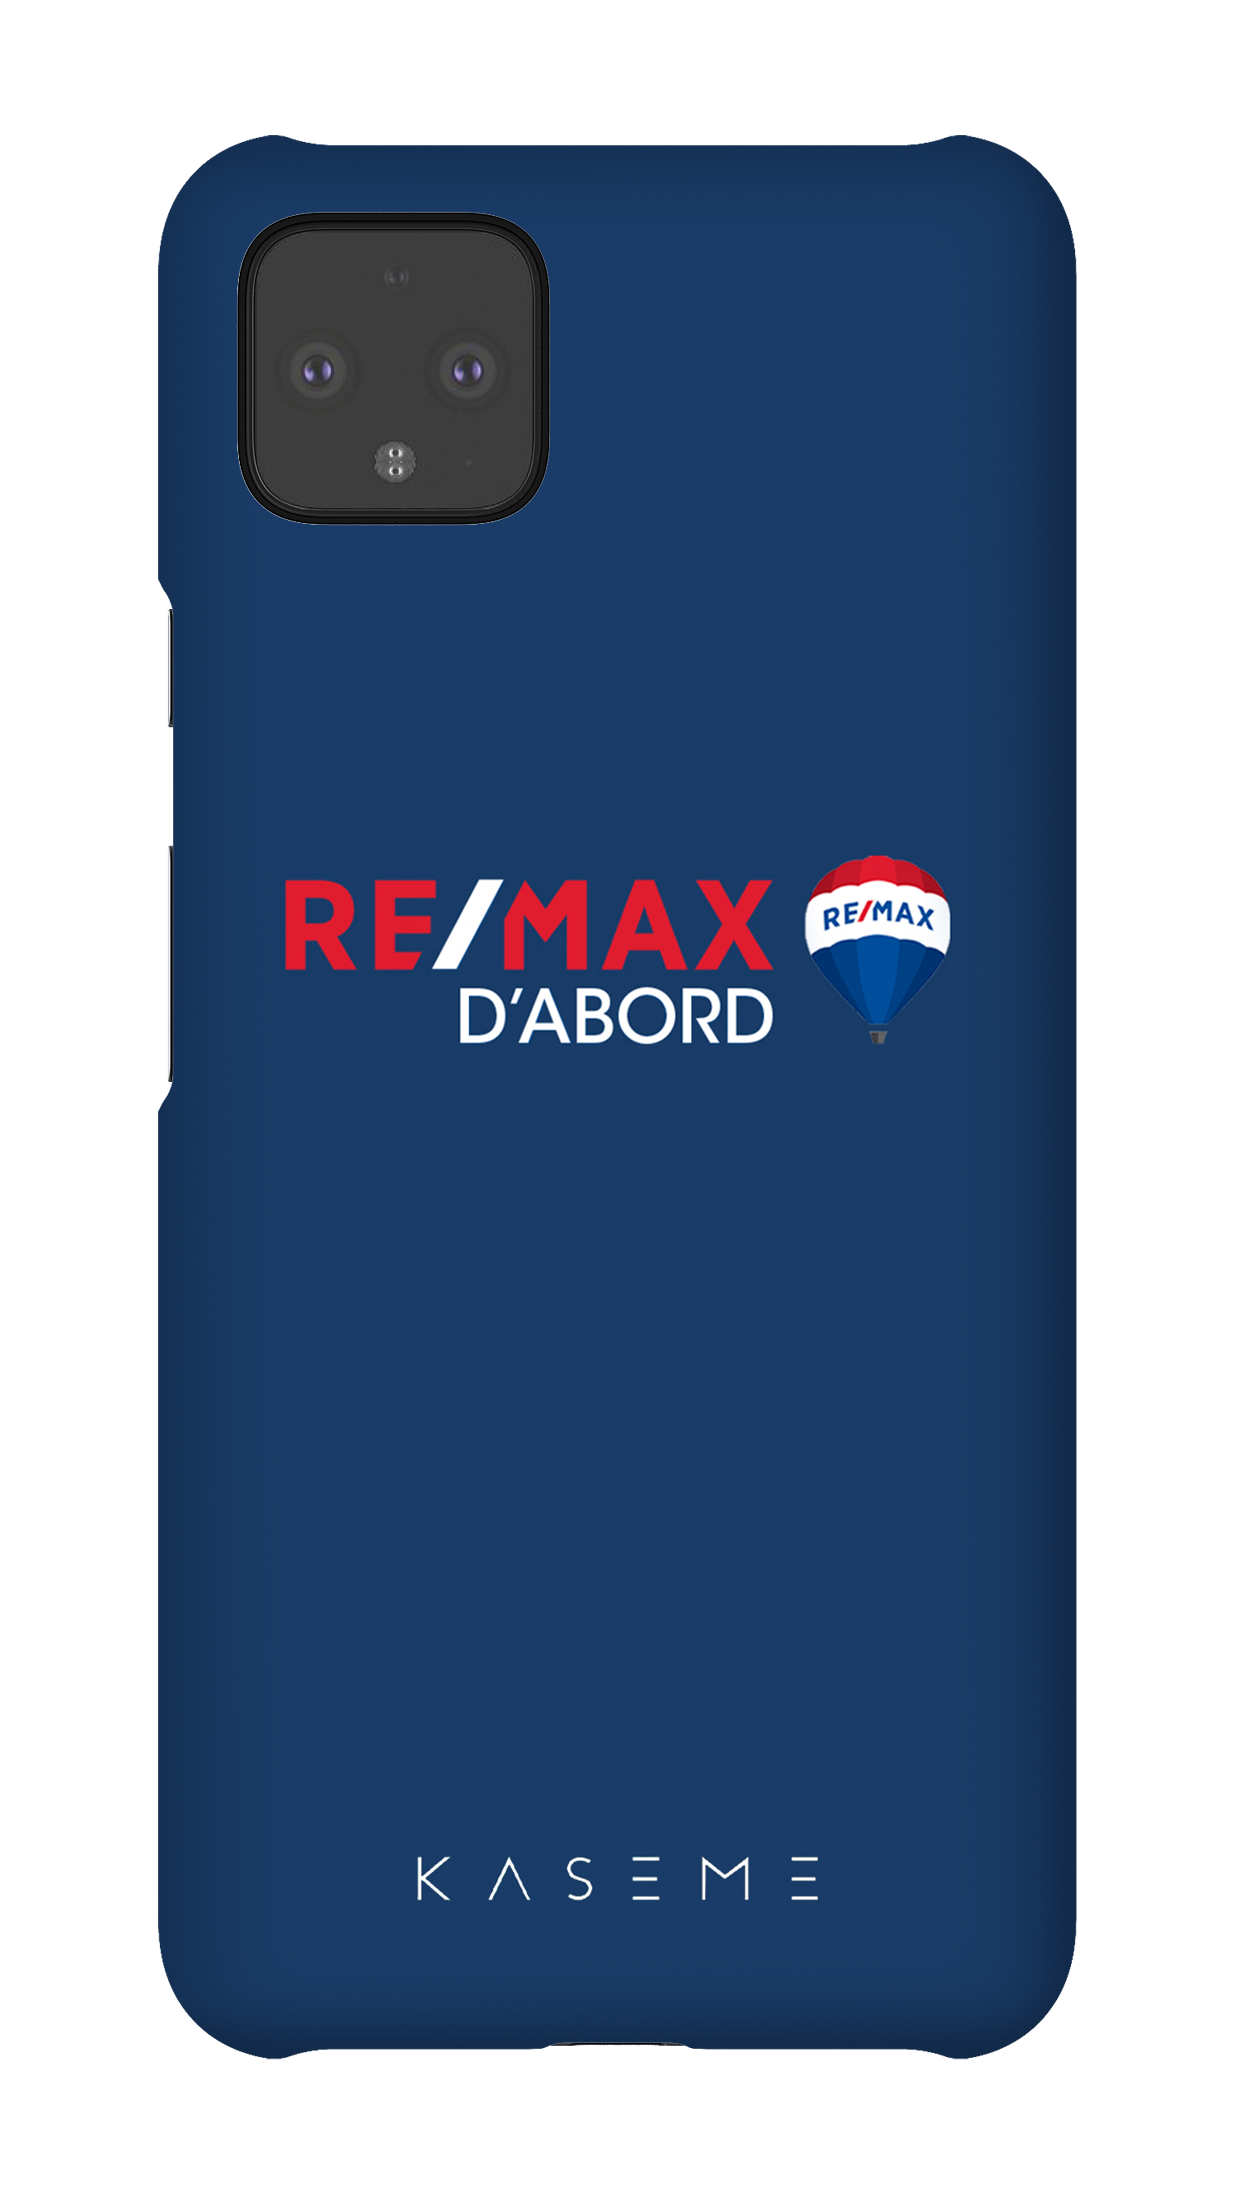 Remax D'abord Bleu - Google Pixel 4 XL